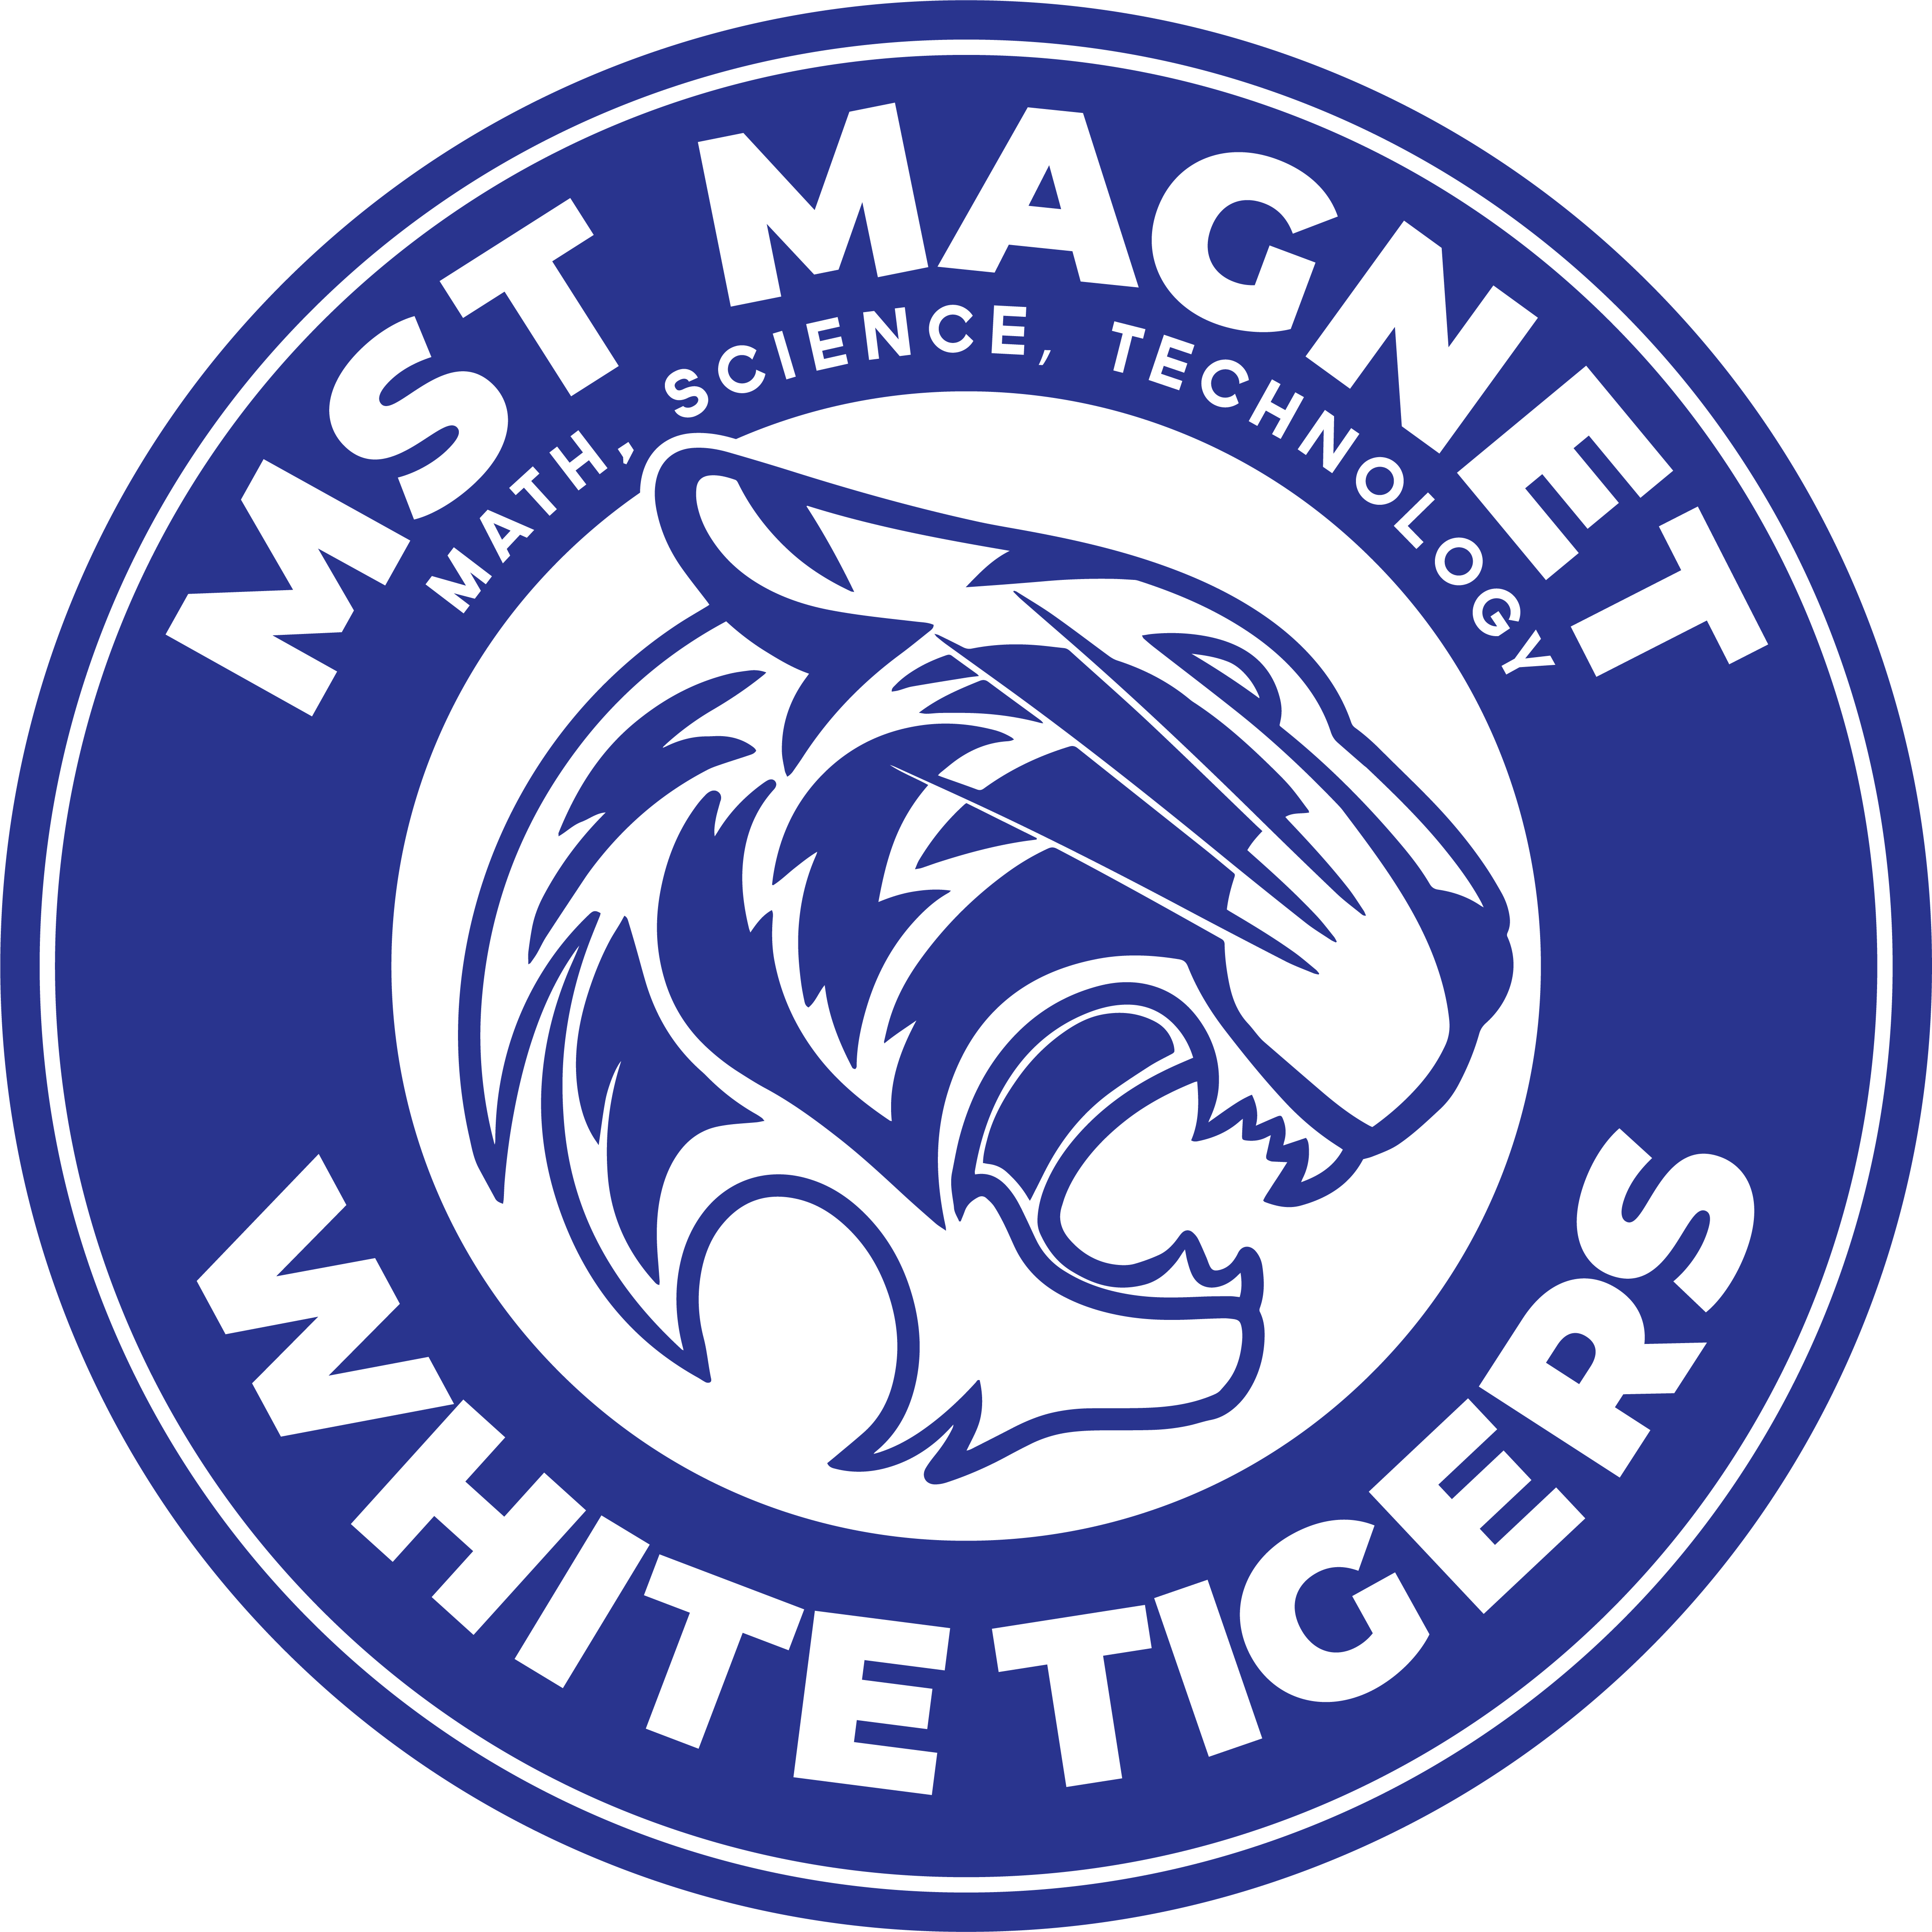 MST Magnet Elementary school